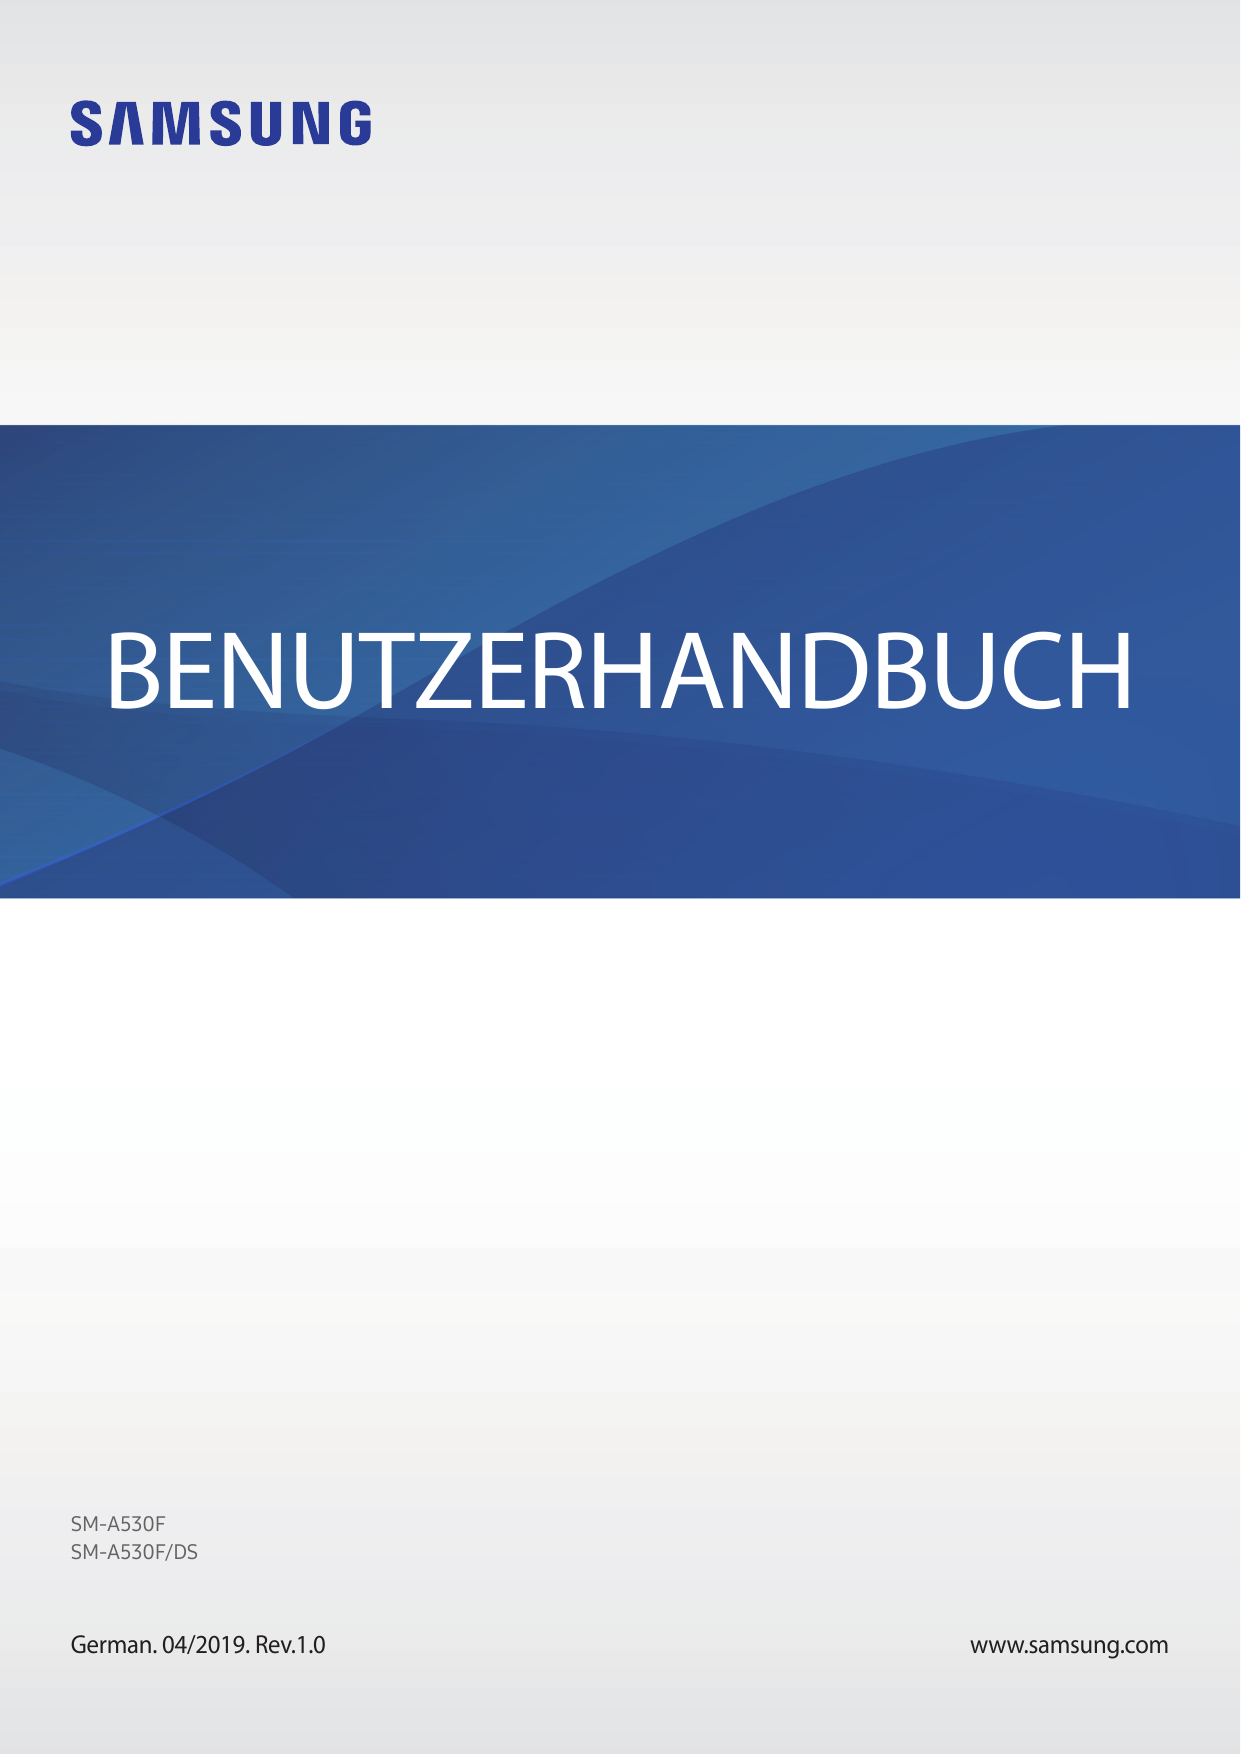 BENUTZERHANDBUCHSM-A530FSM-A530F/DSGerman. 04/2019. Rev.1.0www.samsung.com